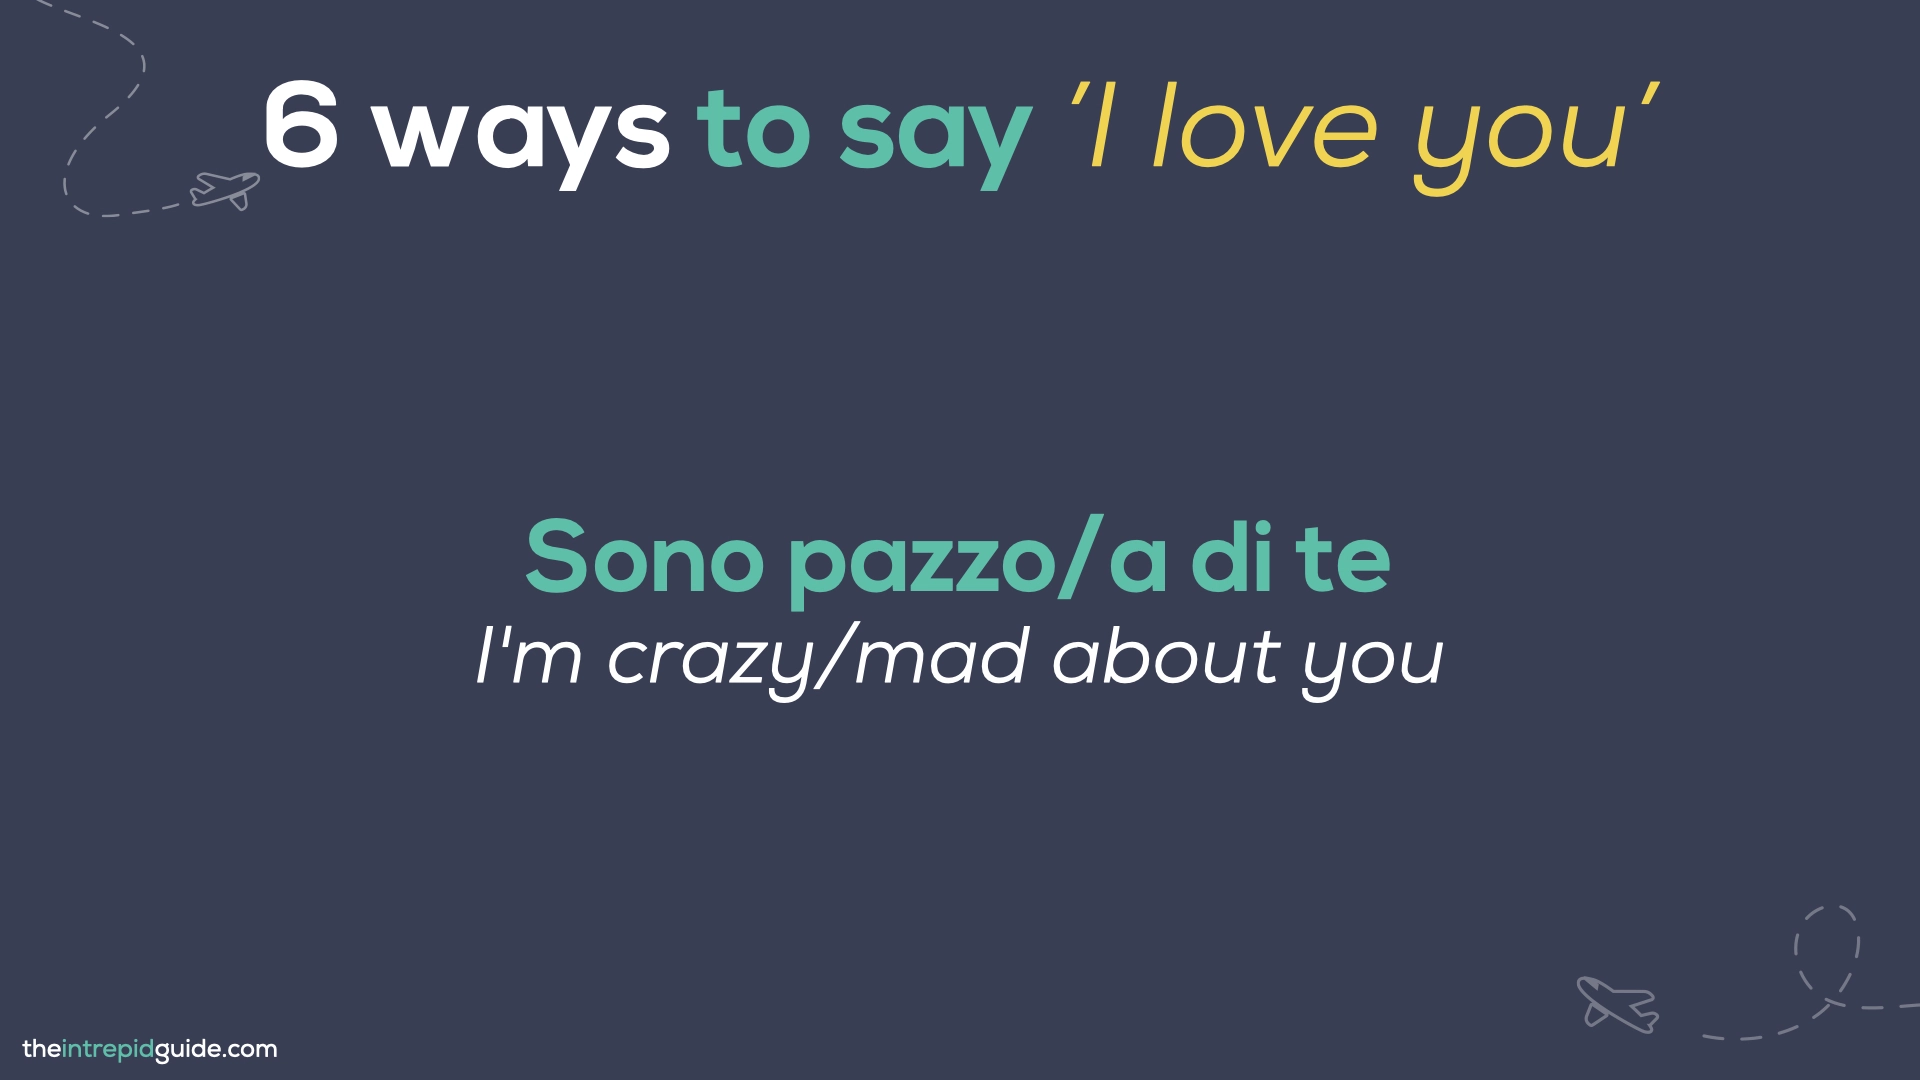 How to say 'I love you' in Italian - Sono pazzo:a di te